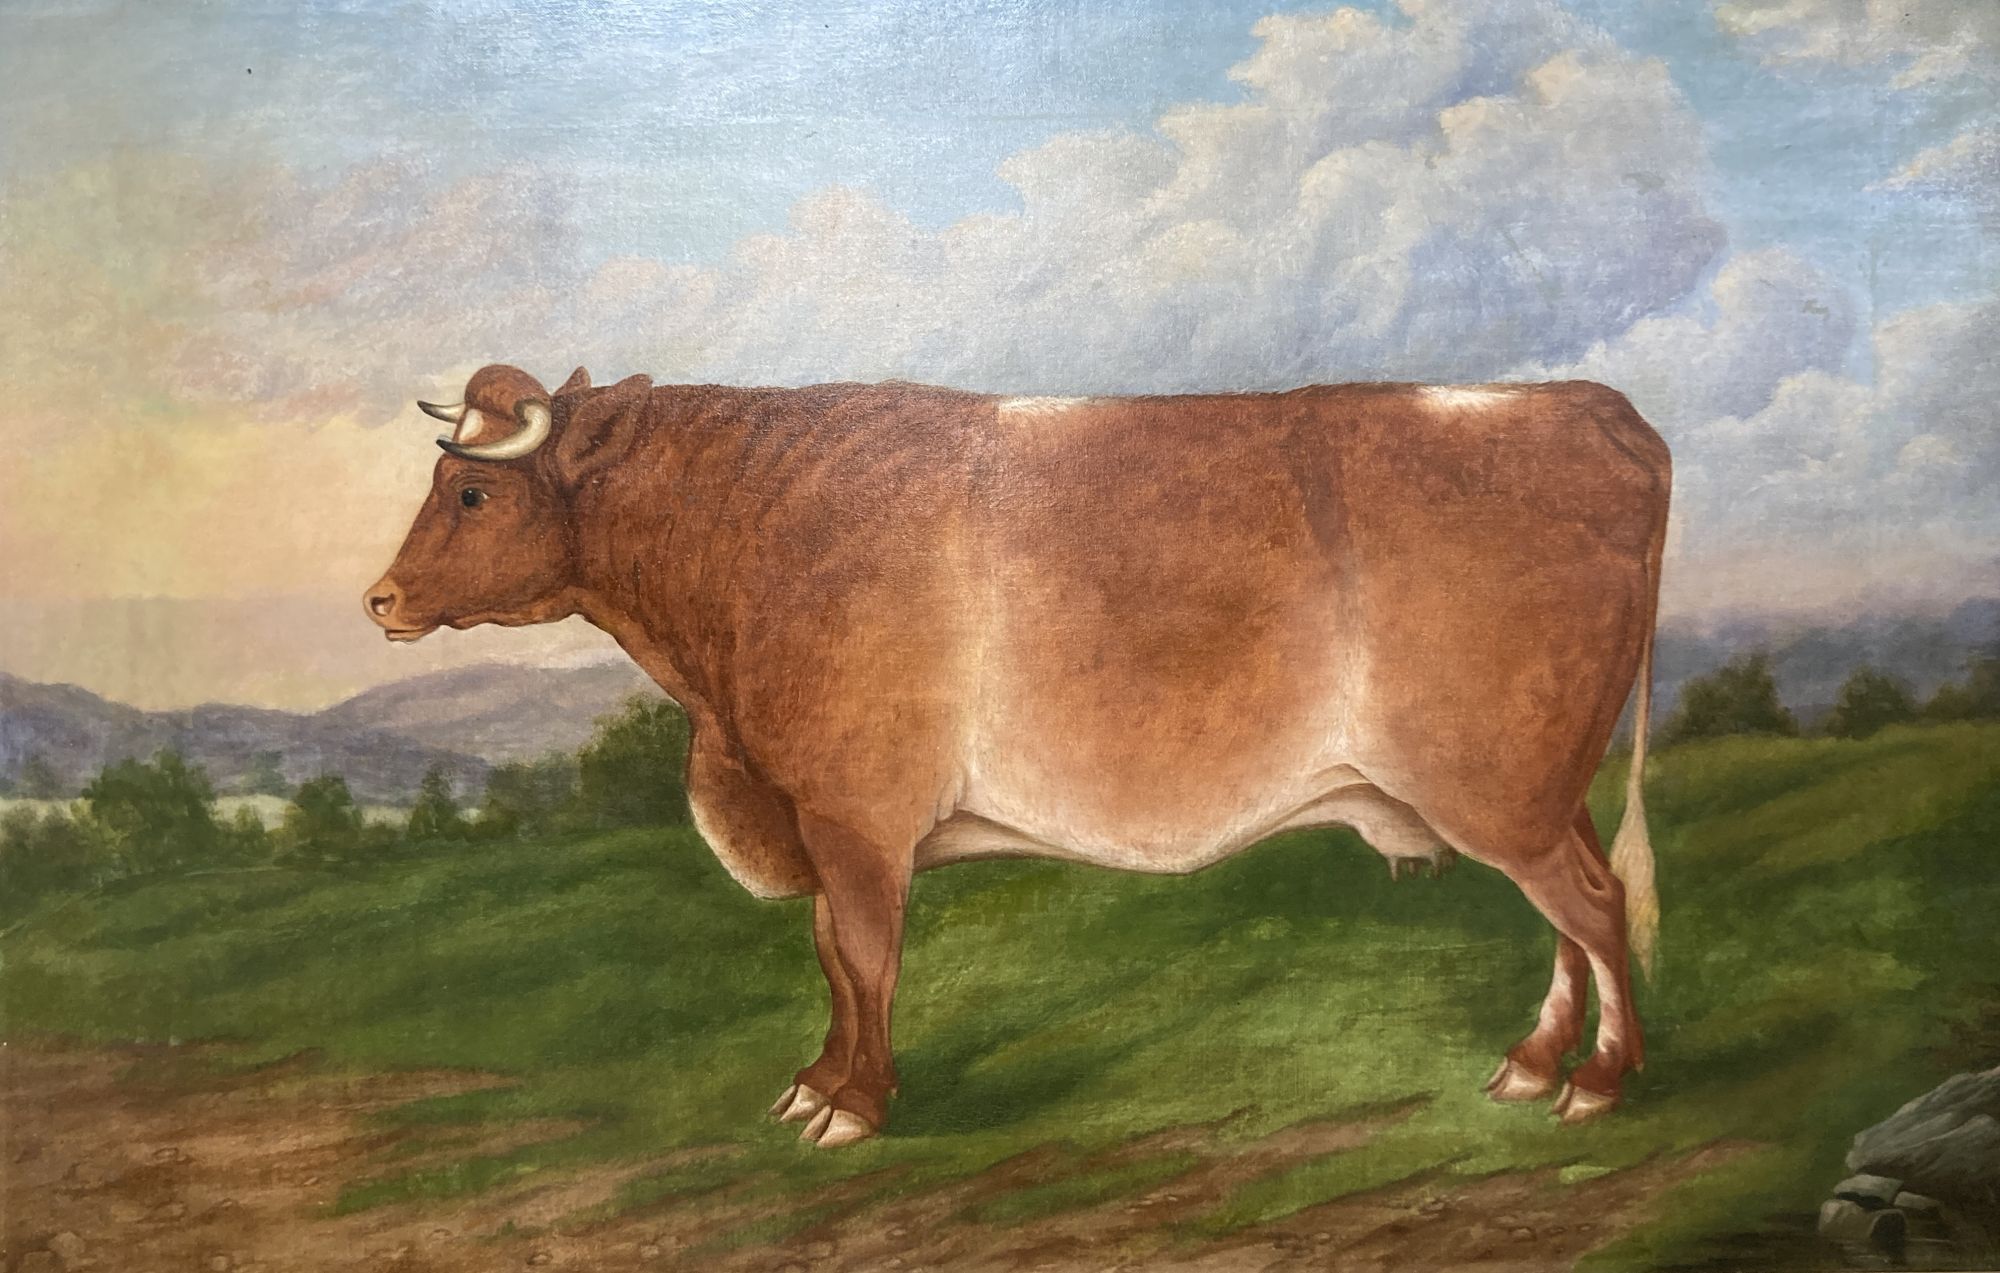 19th century English School, oil on canvas, Cow in a landscape, 60 x 92.5cm